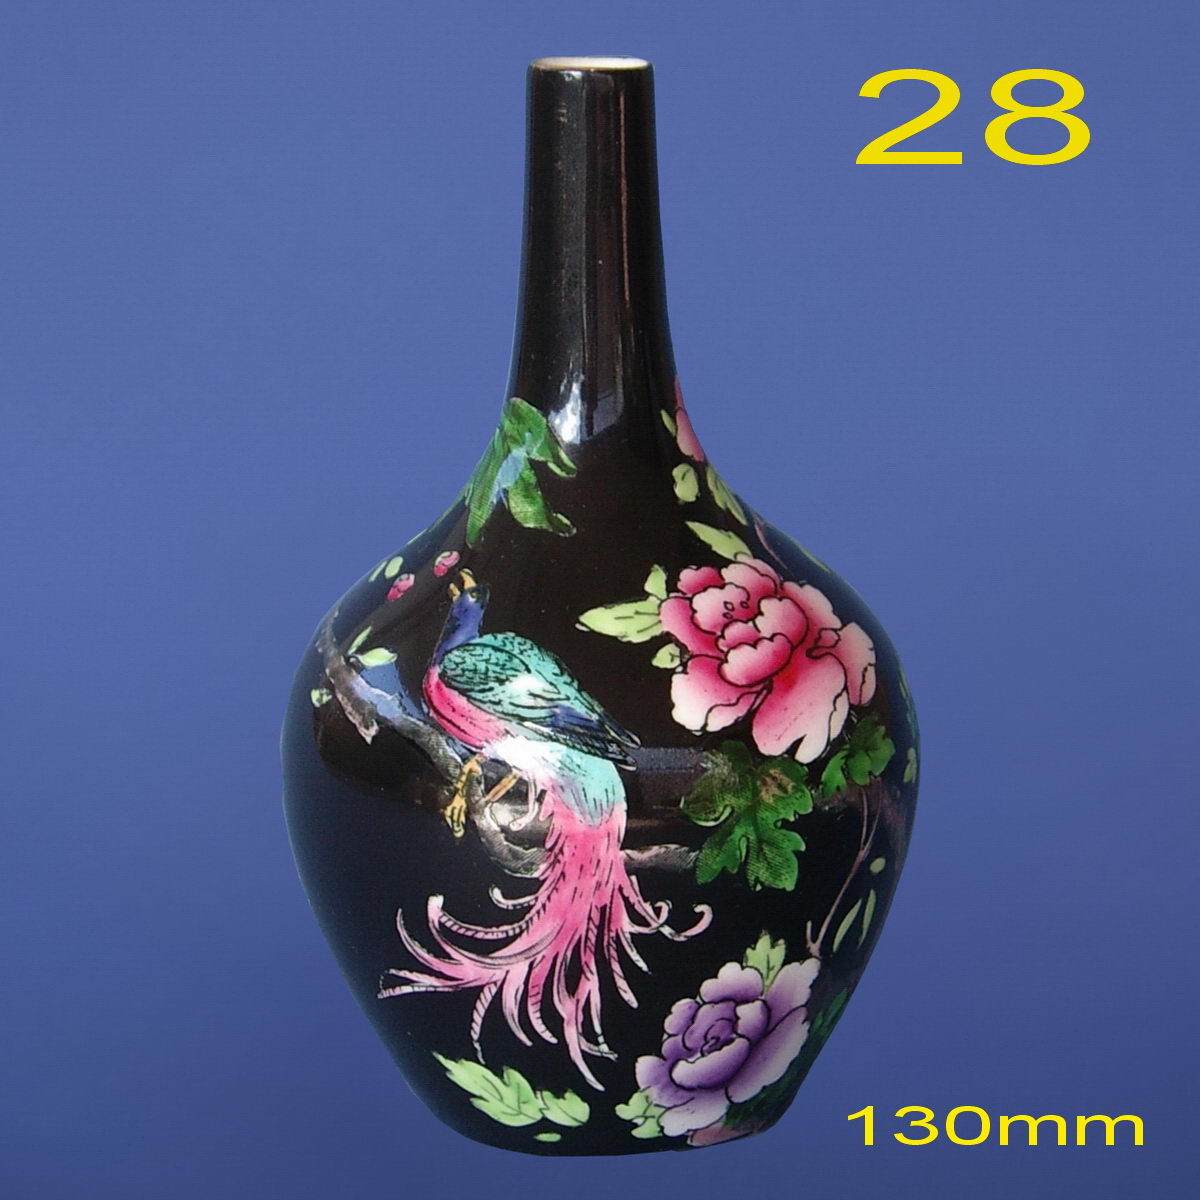 Shape 28 of Small China Vase Series